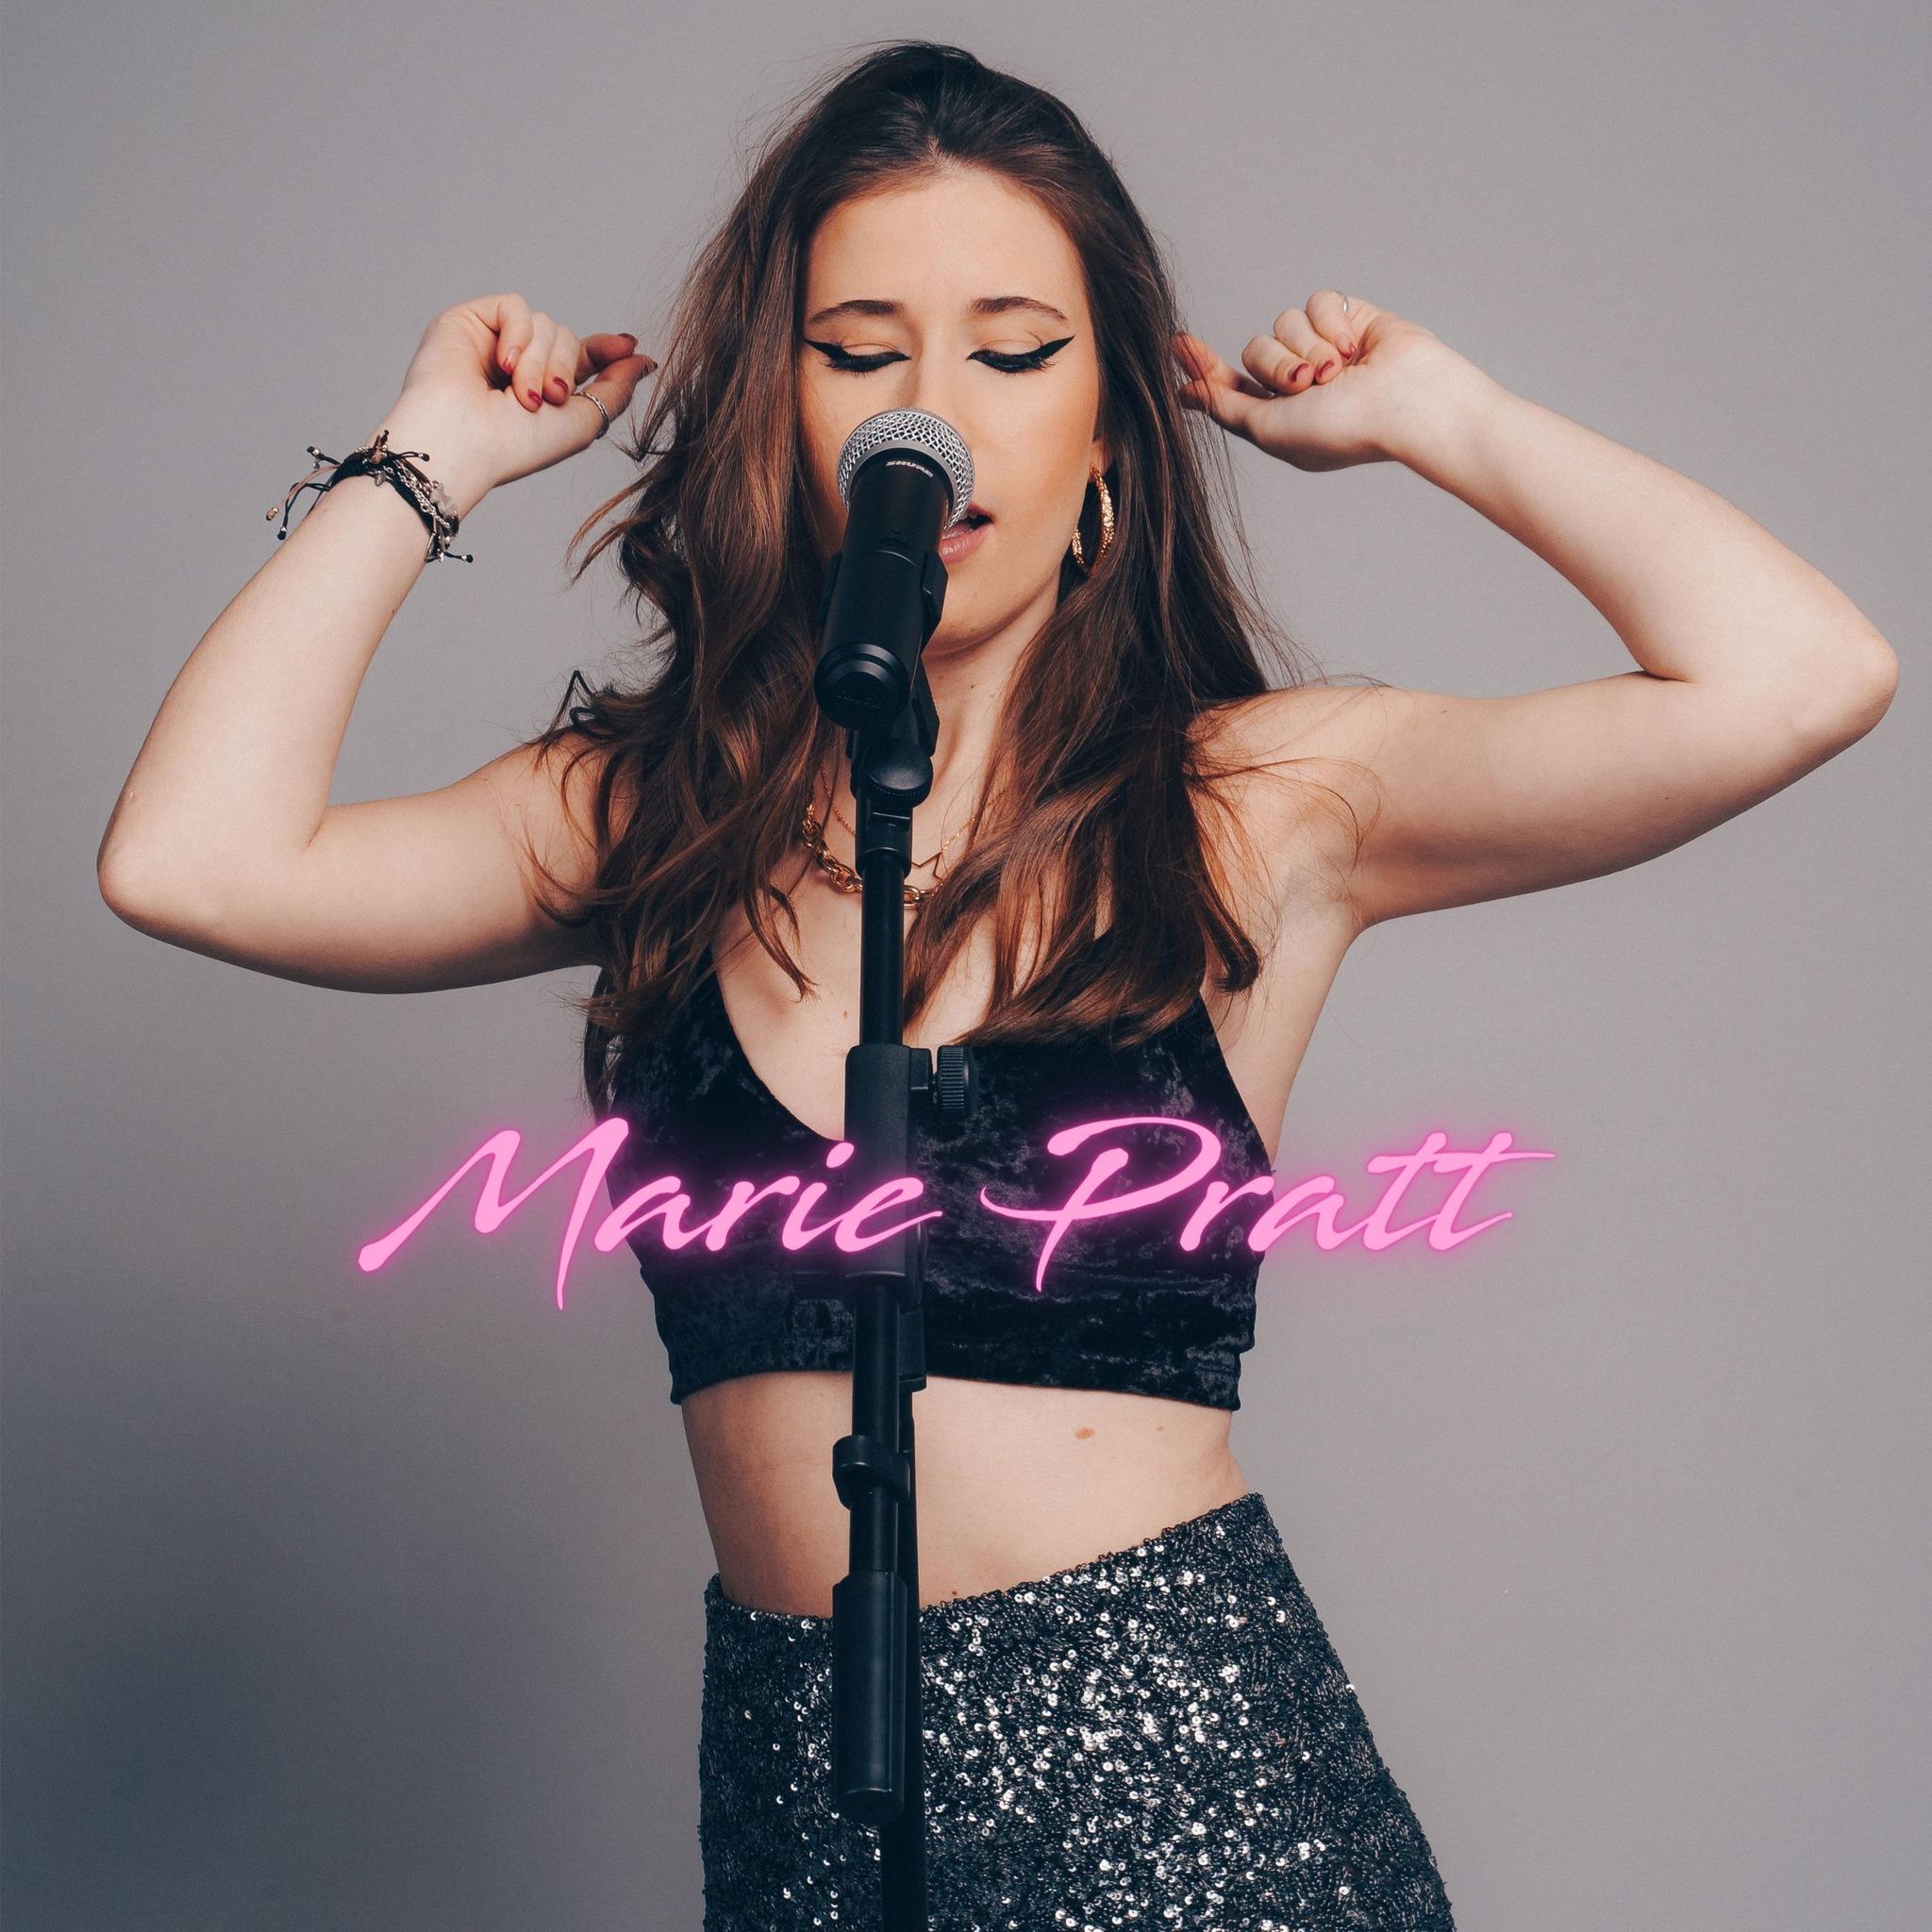 Marie Pratt